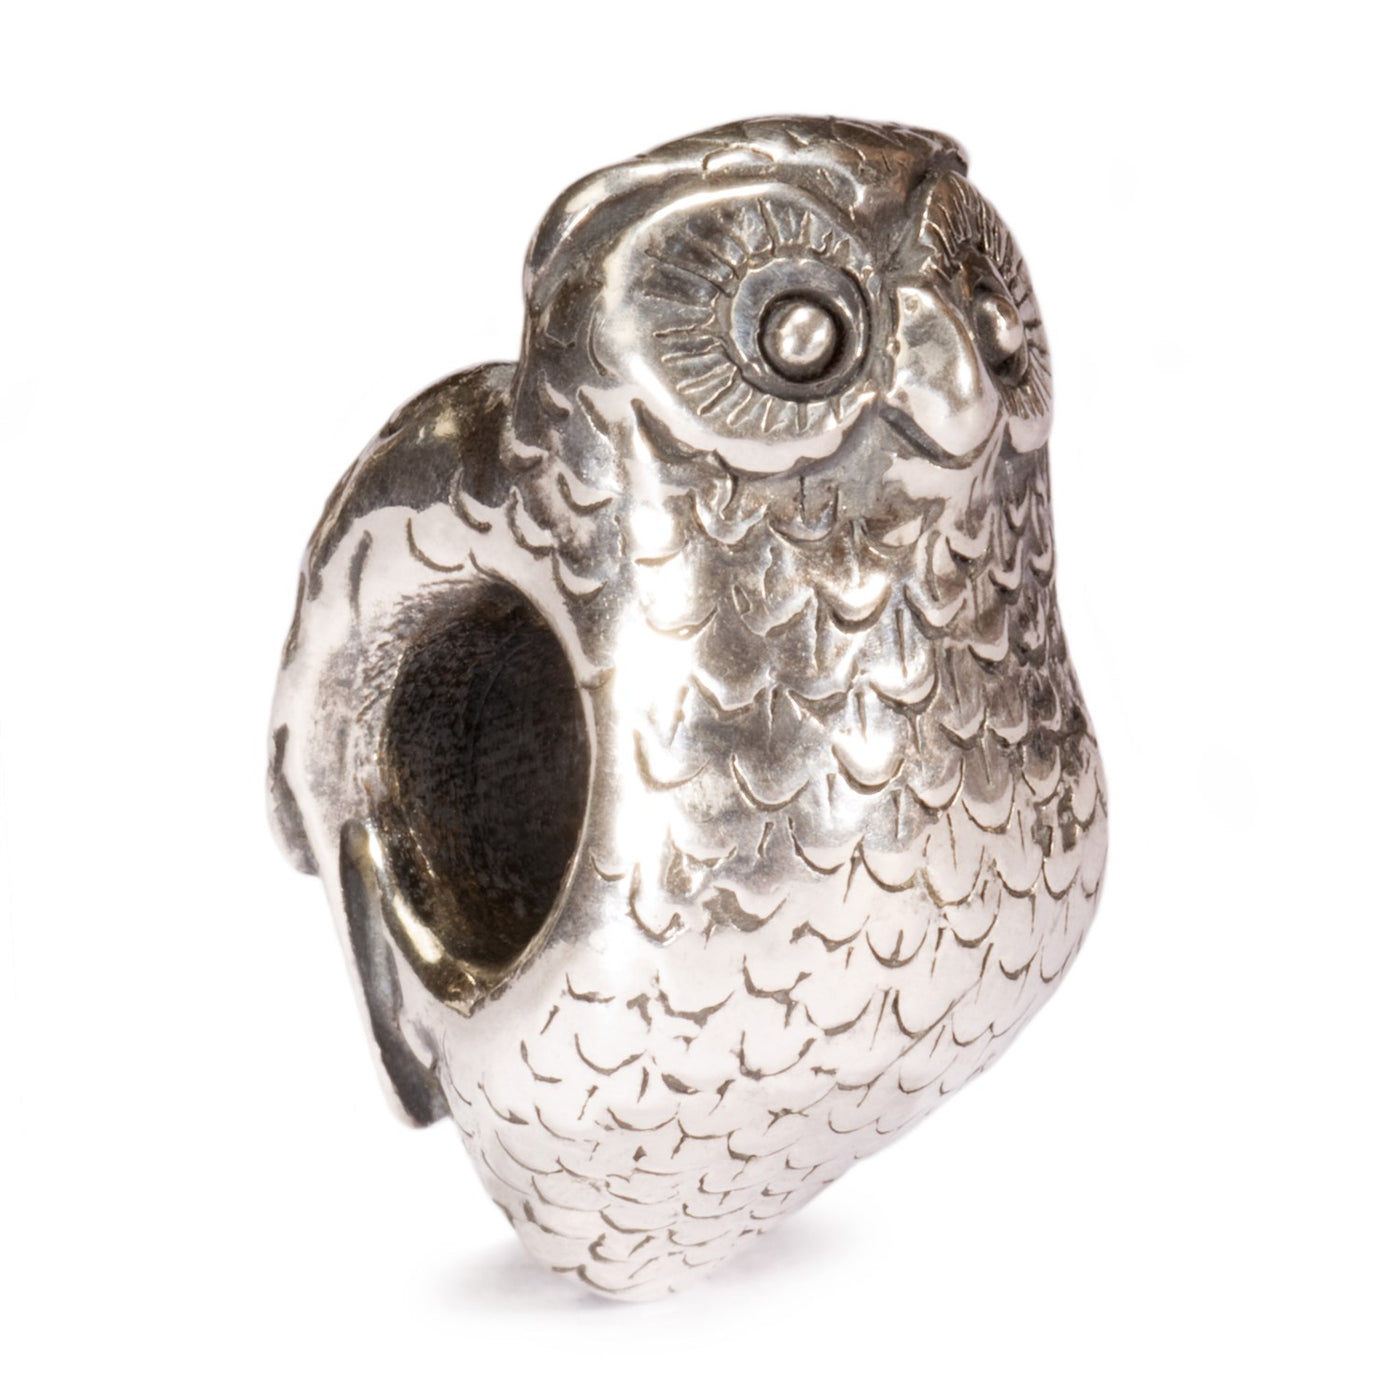 Owl Bead